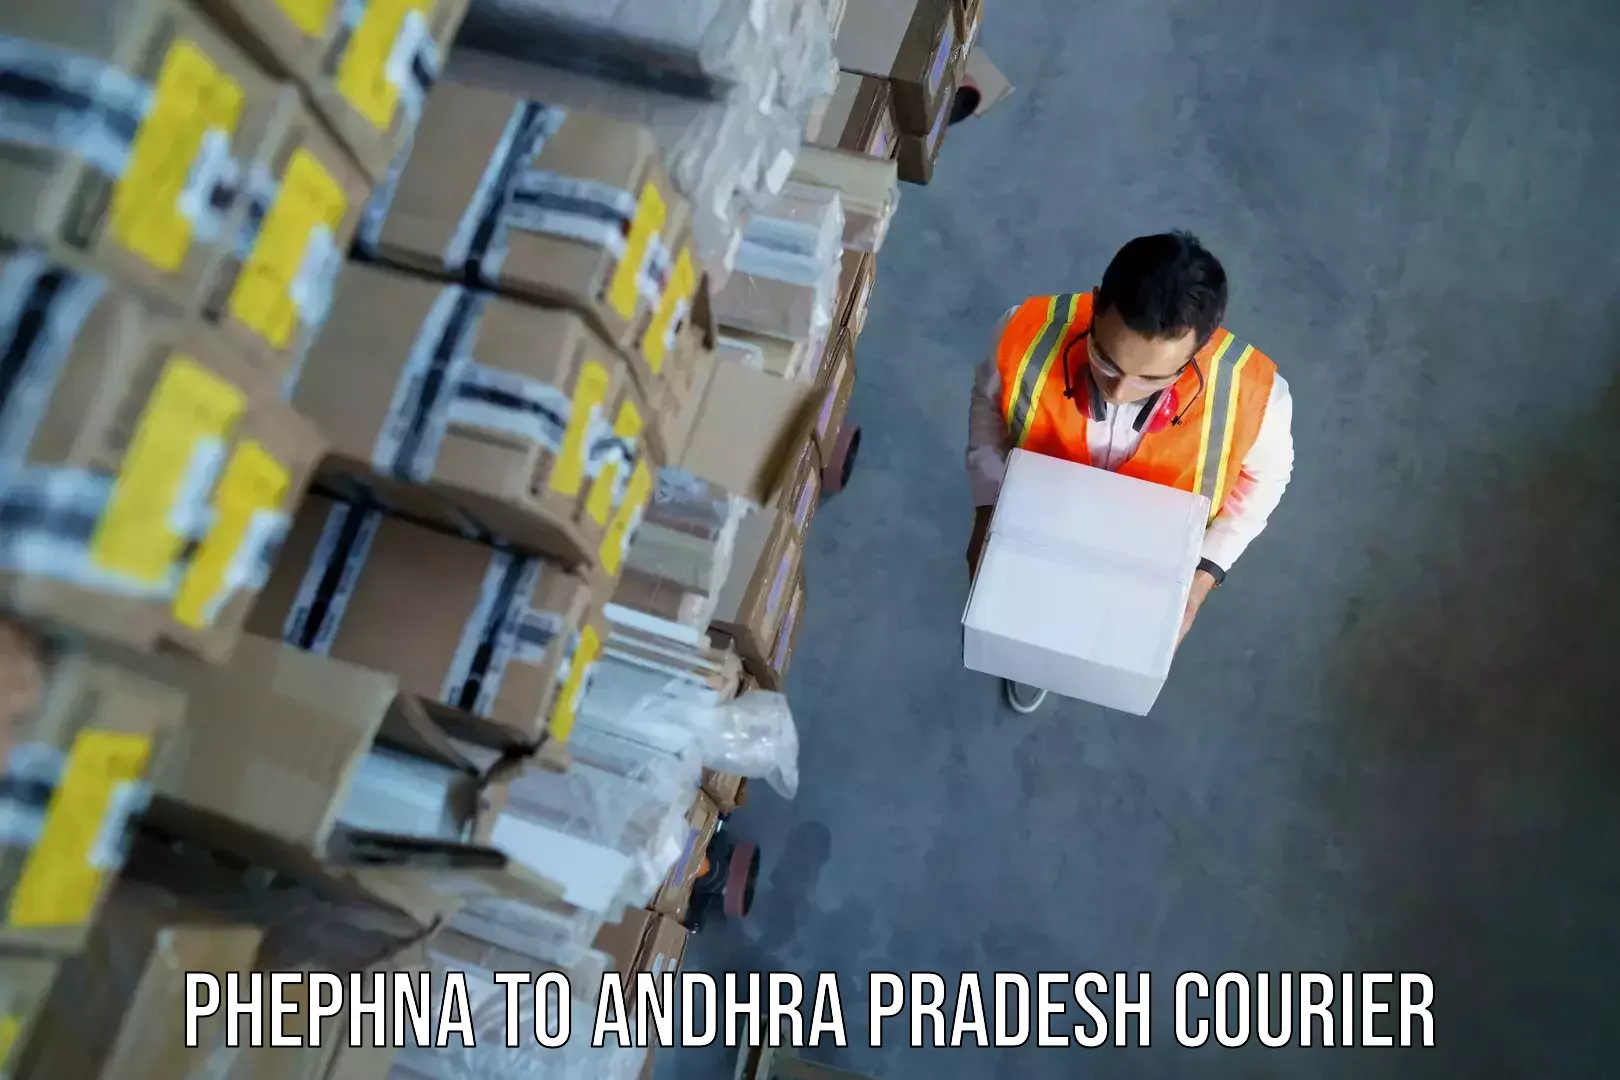 Luggage shipping planner Phephna to Andhra Pradesh